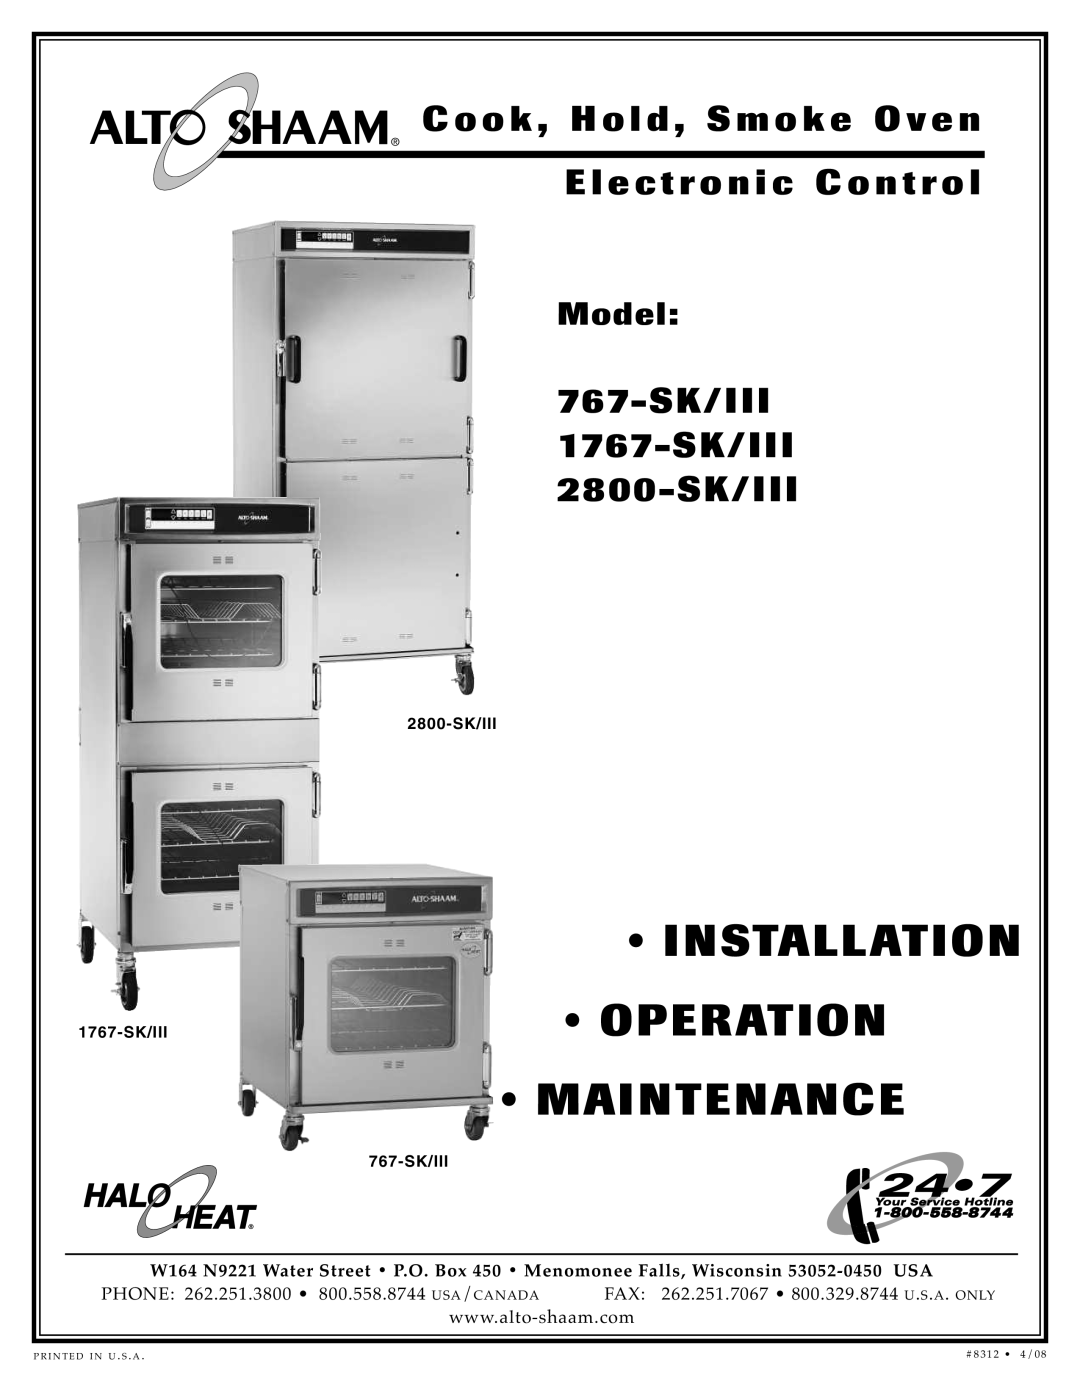 Alto-Shaam 2800-SK/III manual Inst Allatio N, Operation, Mai Ntena Nce, Coo k, Hol d, Sm oke Oven, S K/I, 1767-SK, Model 